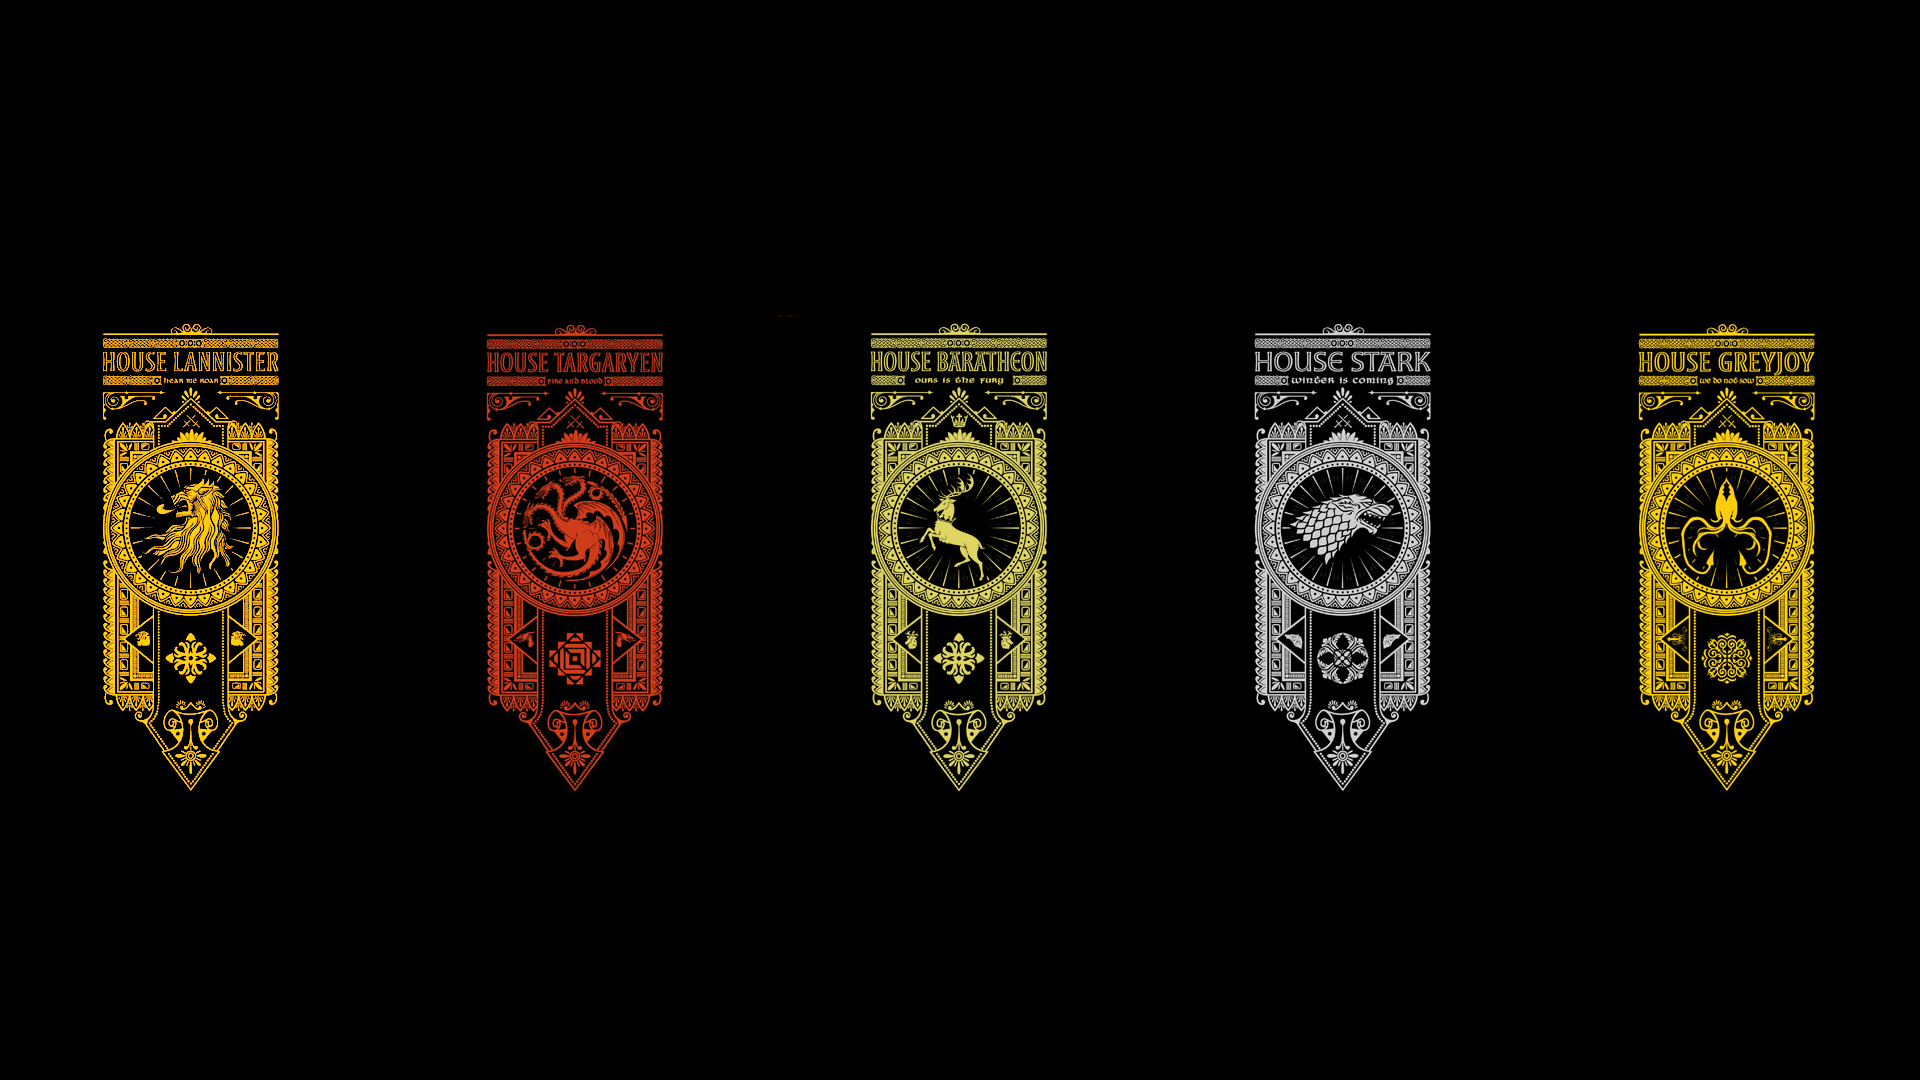 General 1920x1080 Game of Thrones sigils TV series black background banner